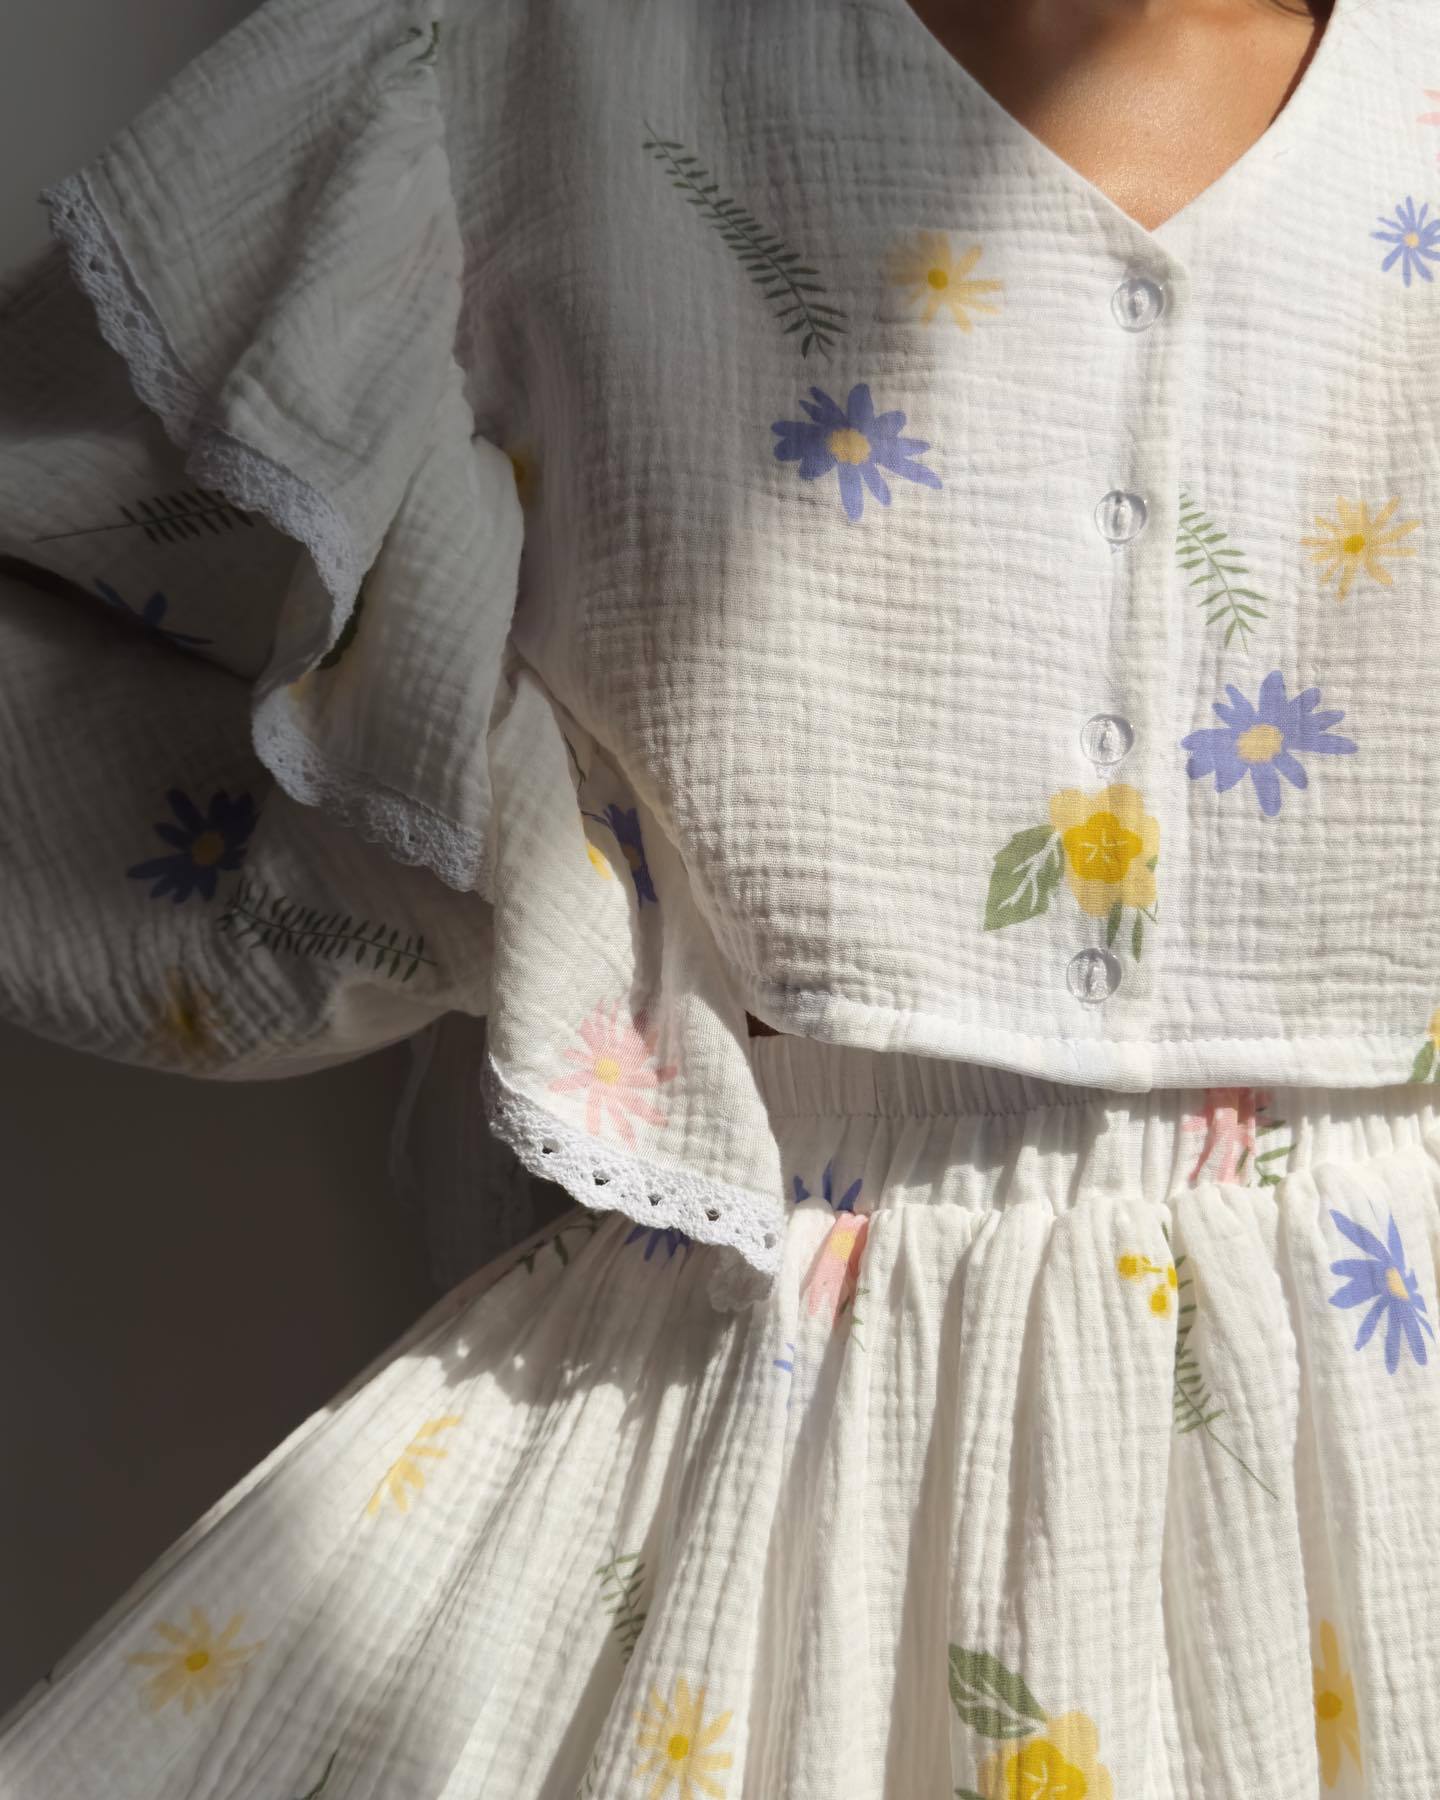 Cotton Linen Ruffled Strawberry Printed Short Skirt Set